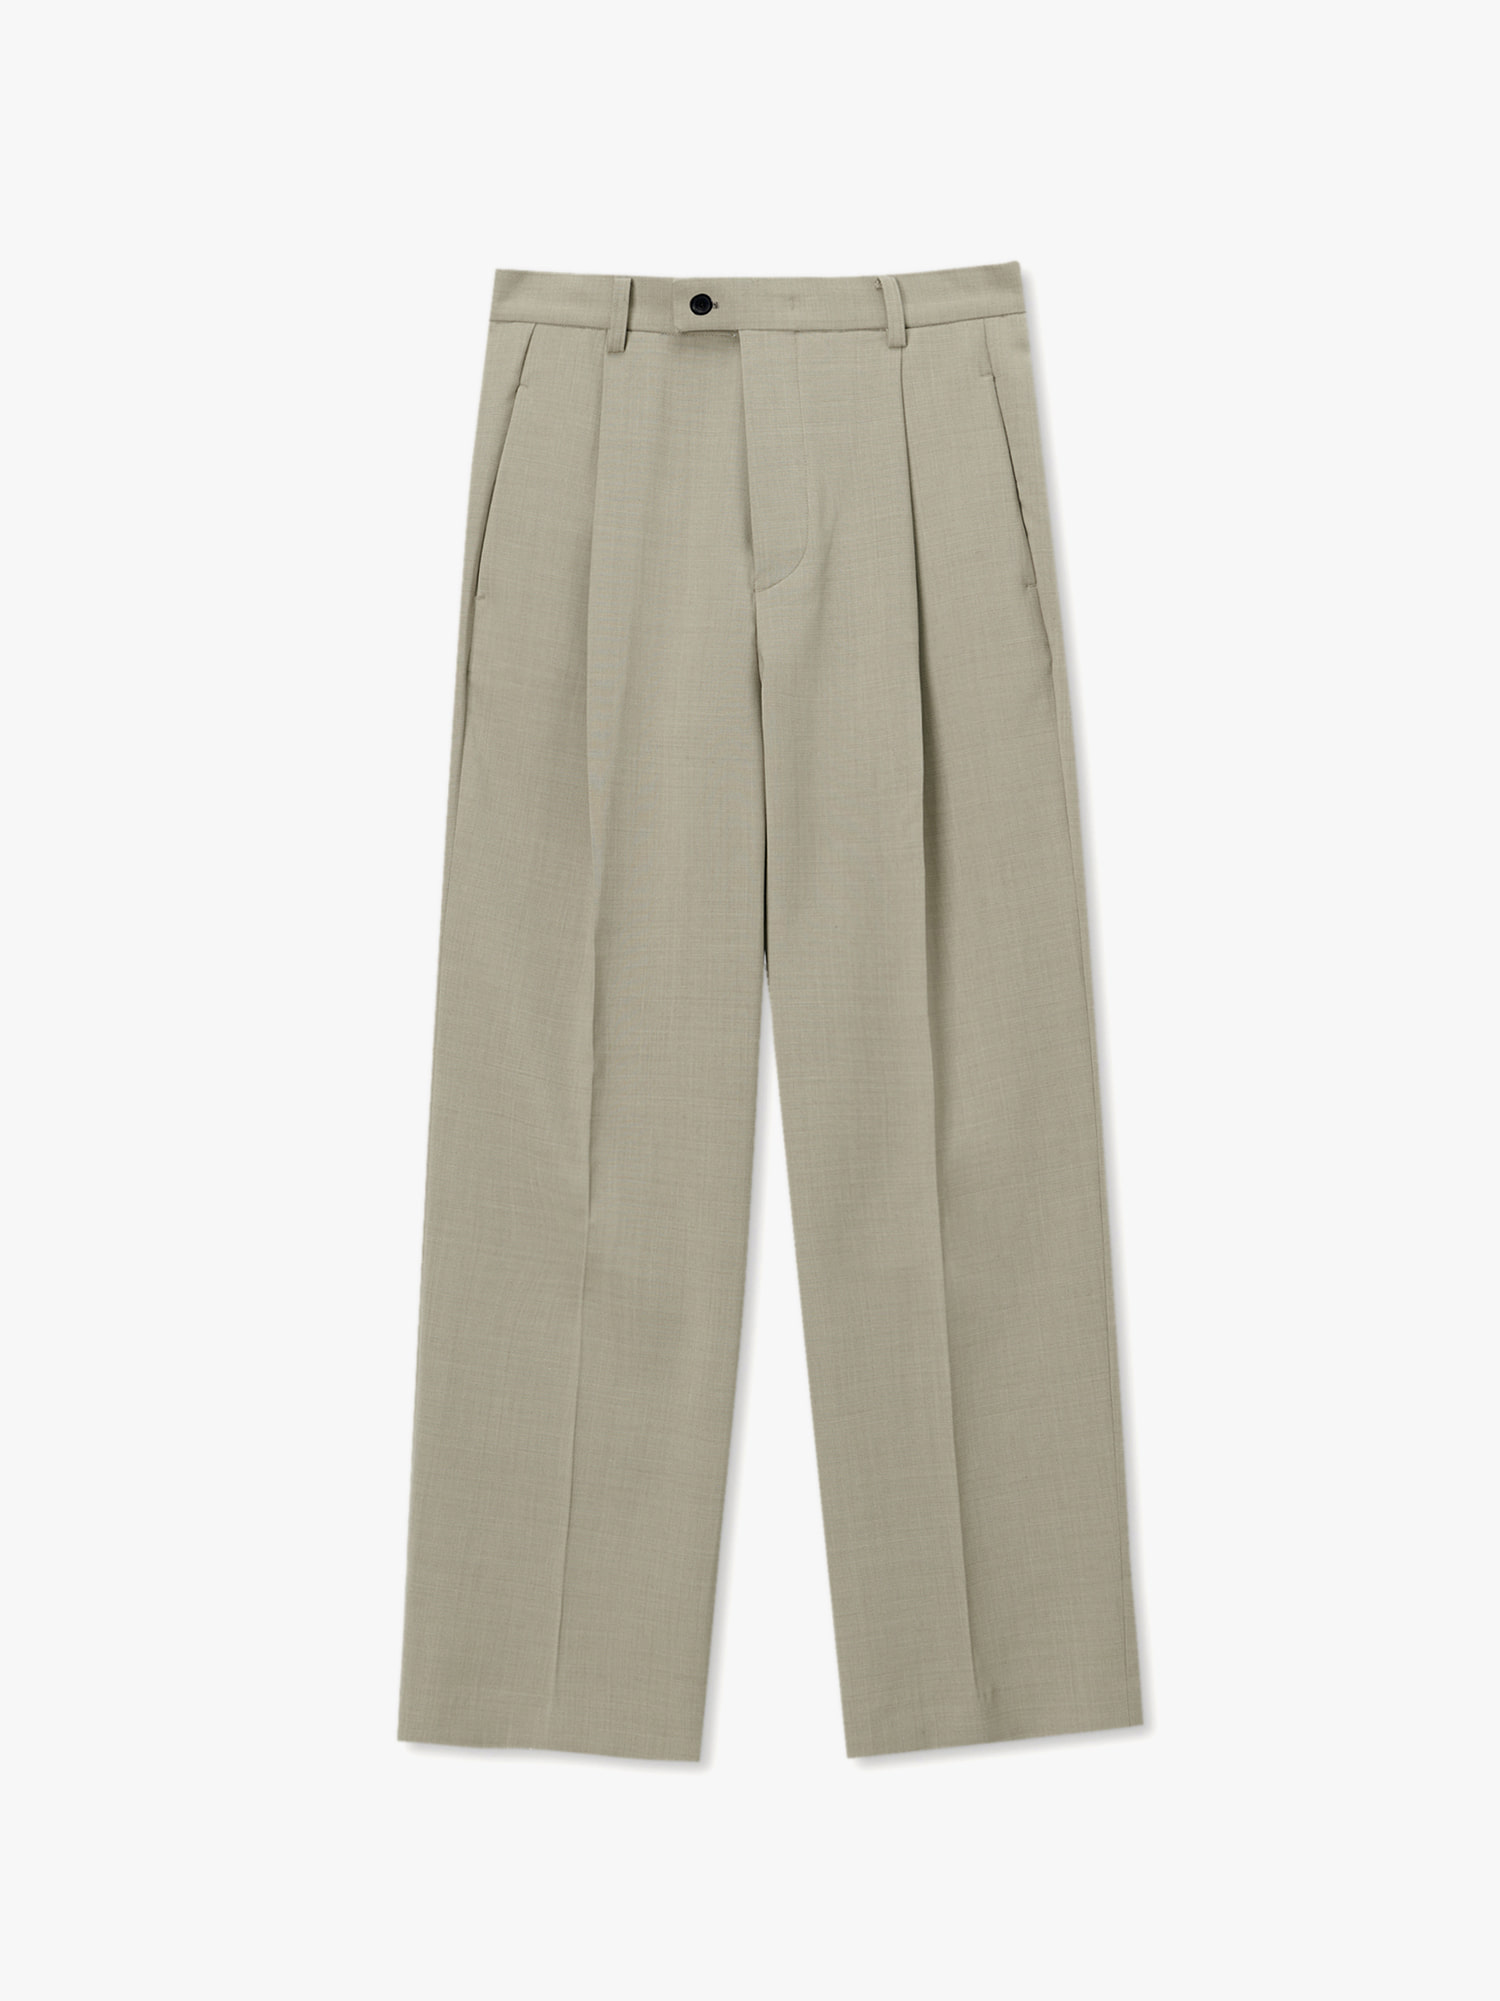 Merino Wool One Tuck Semi-Wide Pants (Beige)